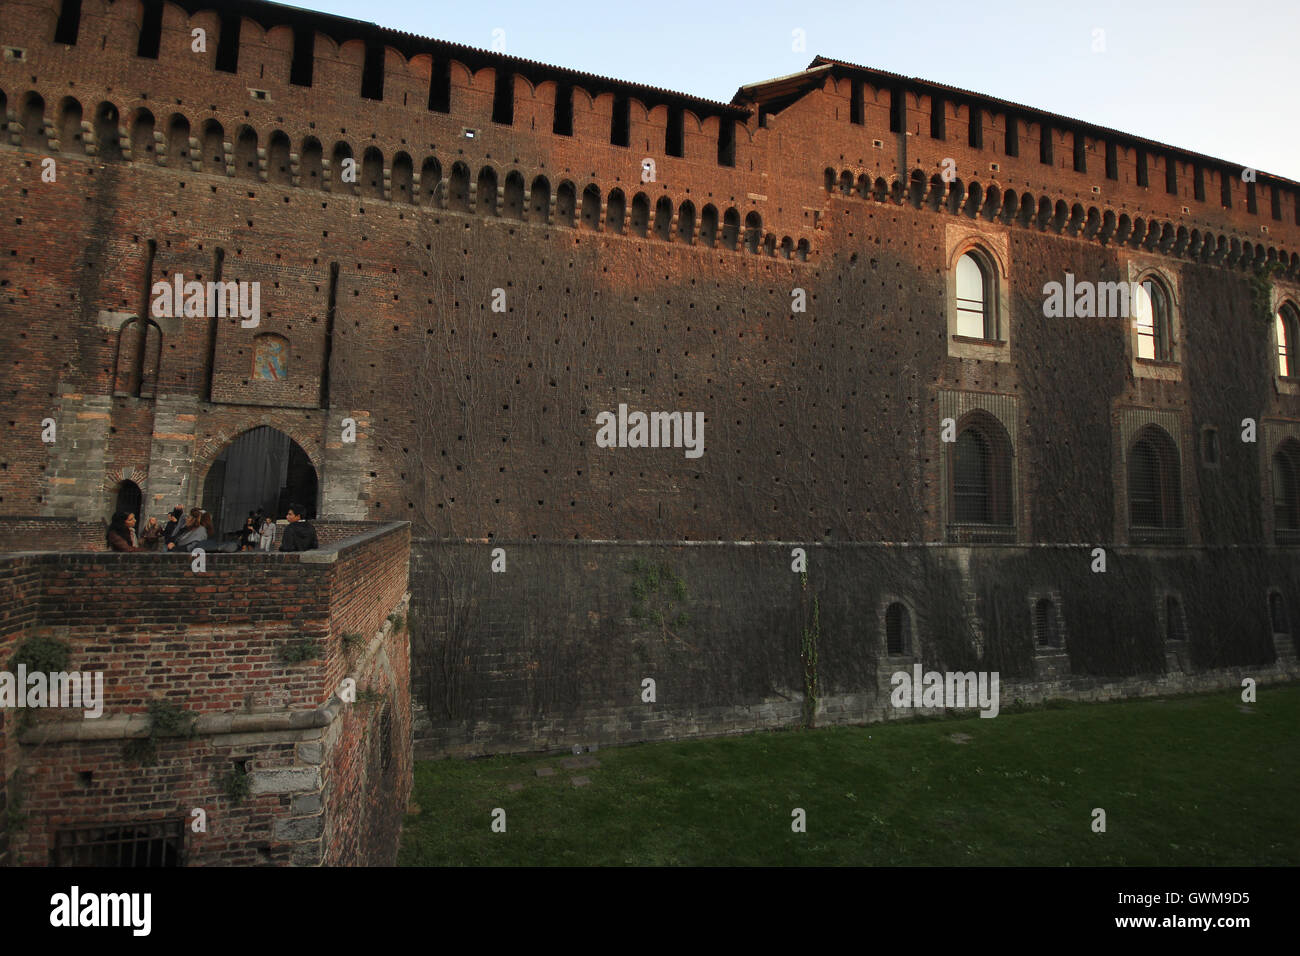 the walls of the Sforzesco Castle and it's moat, Milan, Italy, Castello Sforzesco Stock Photo